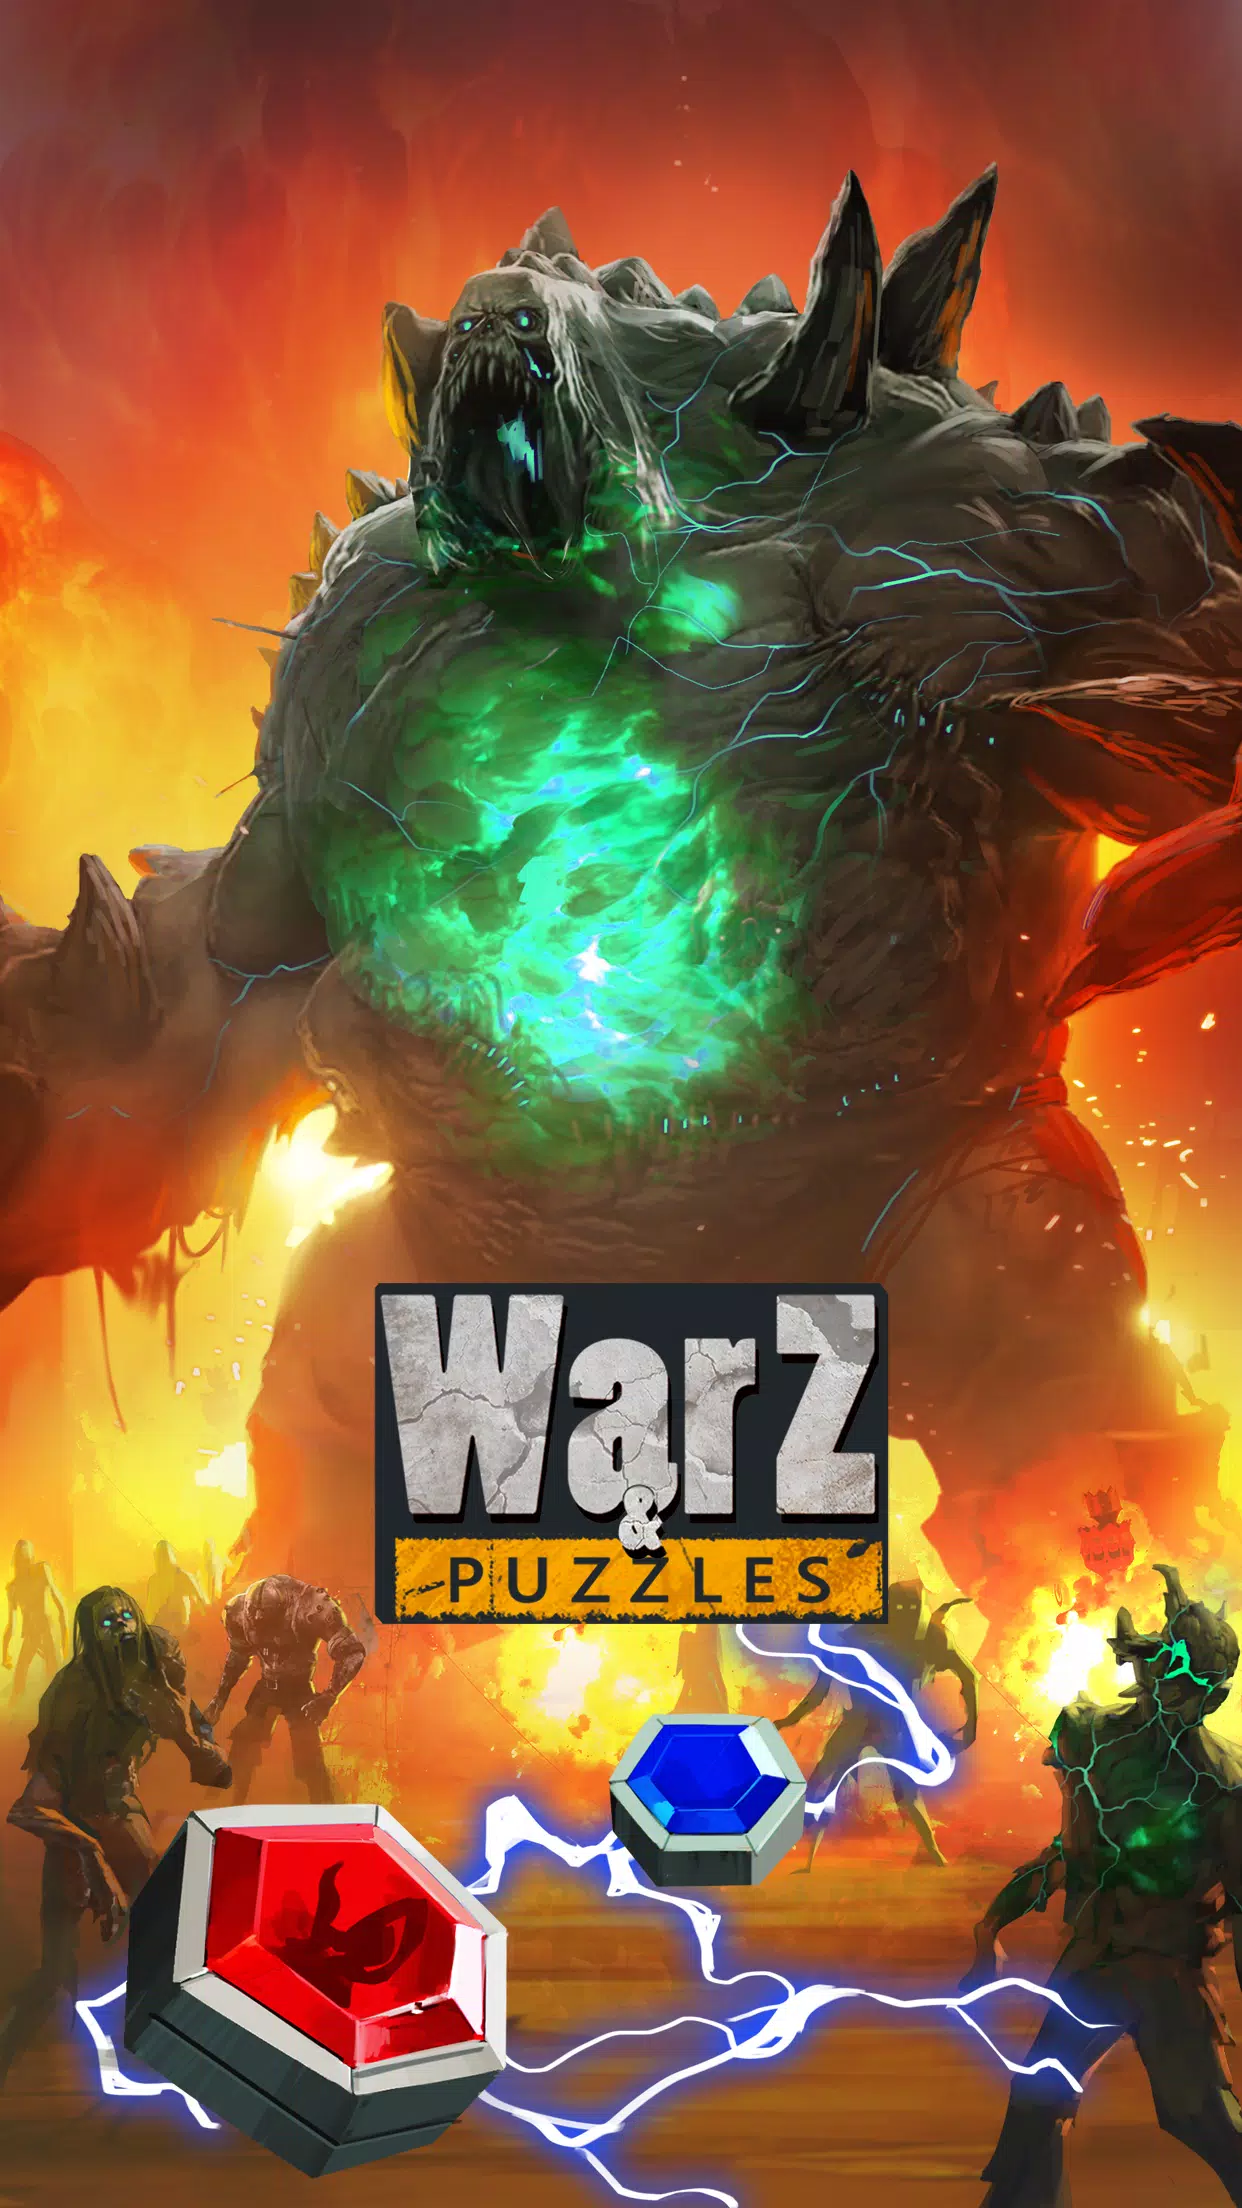 Download do APK de Guerra Z Greve Jogos de Zumbis para Android